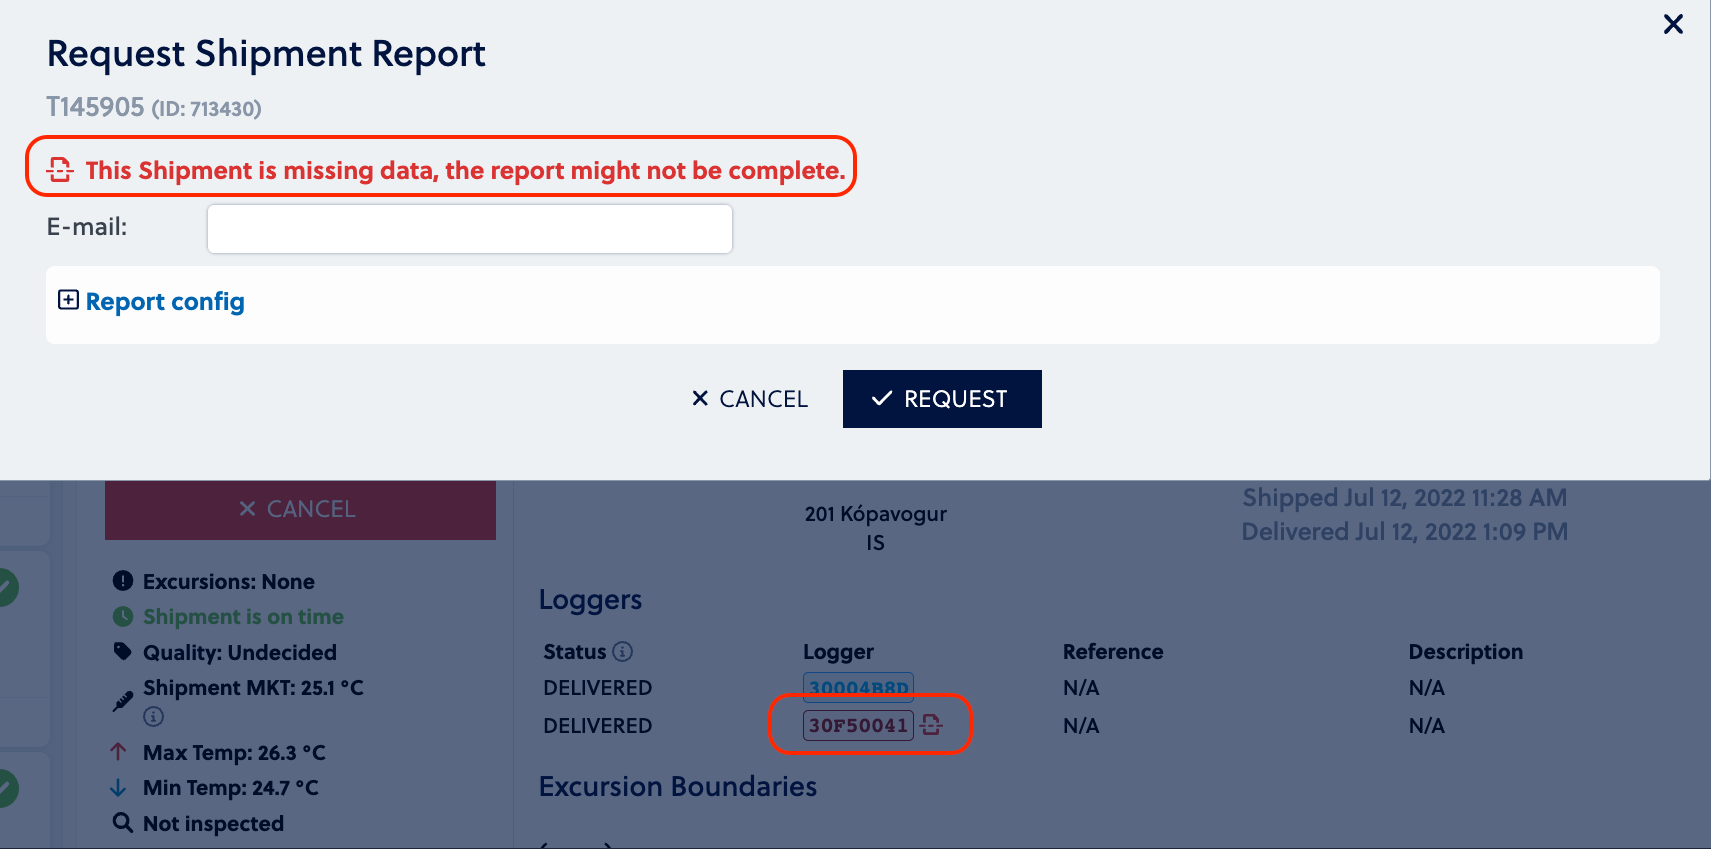 Request shipment report - Error: Shipment is missing data